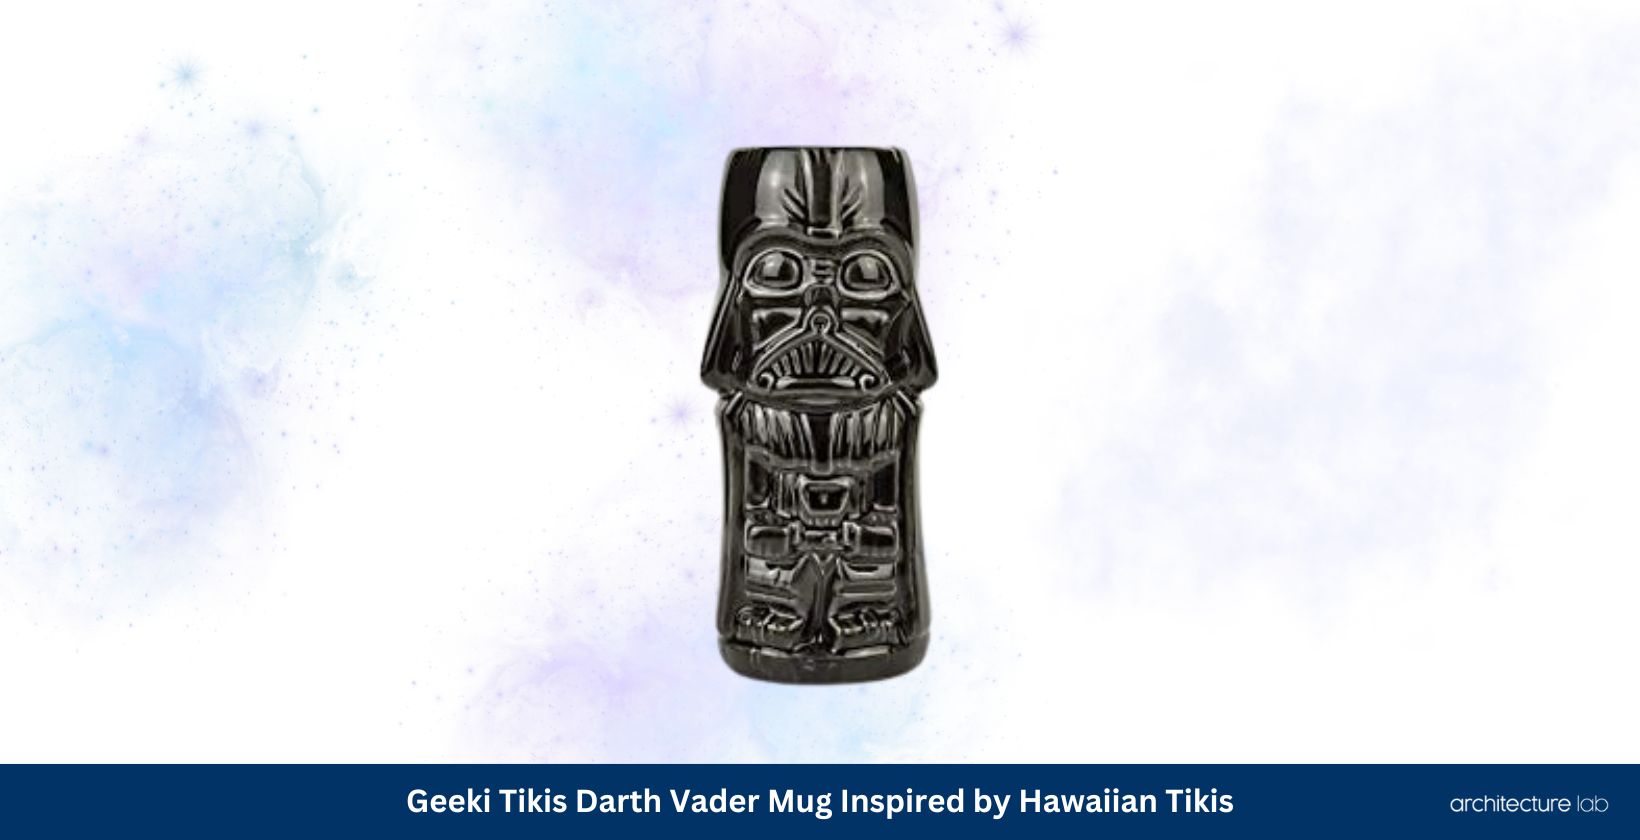 The incredible geeki tikis darth vader mug inspired by hawaiian tikis